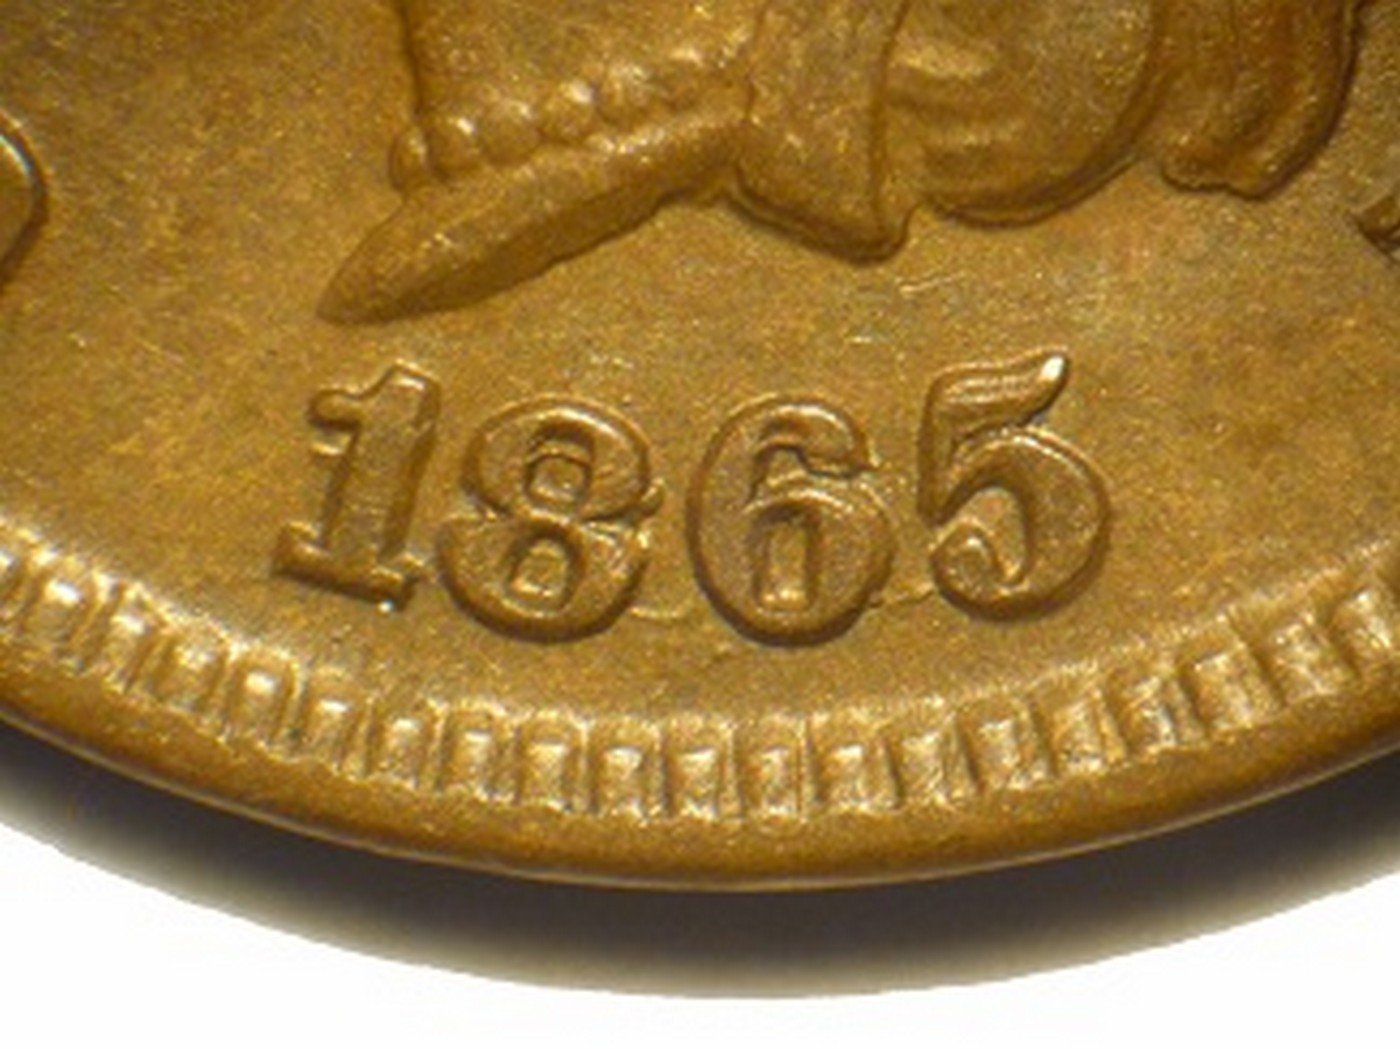 1865 Plain 5 RPD-002 - Indian Head Penny - Photo by David Poliquin